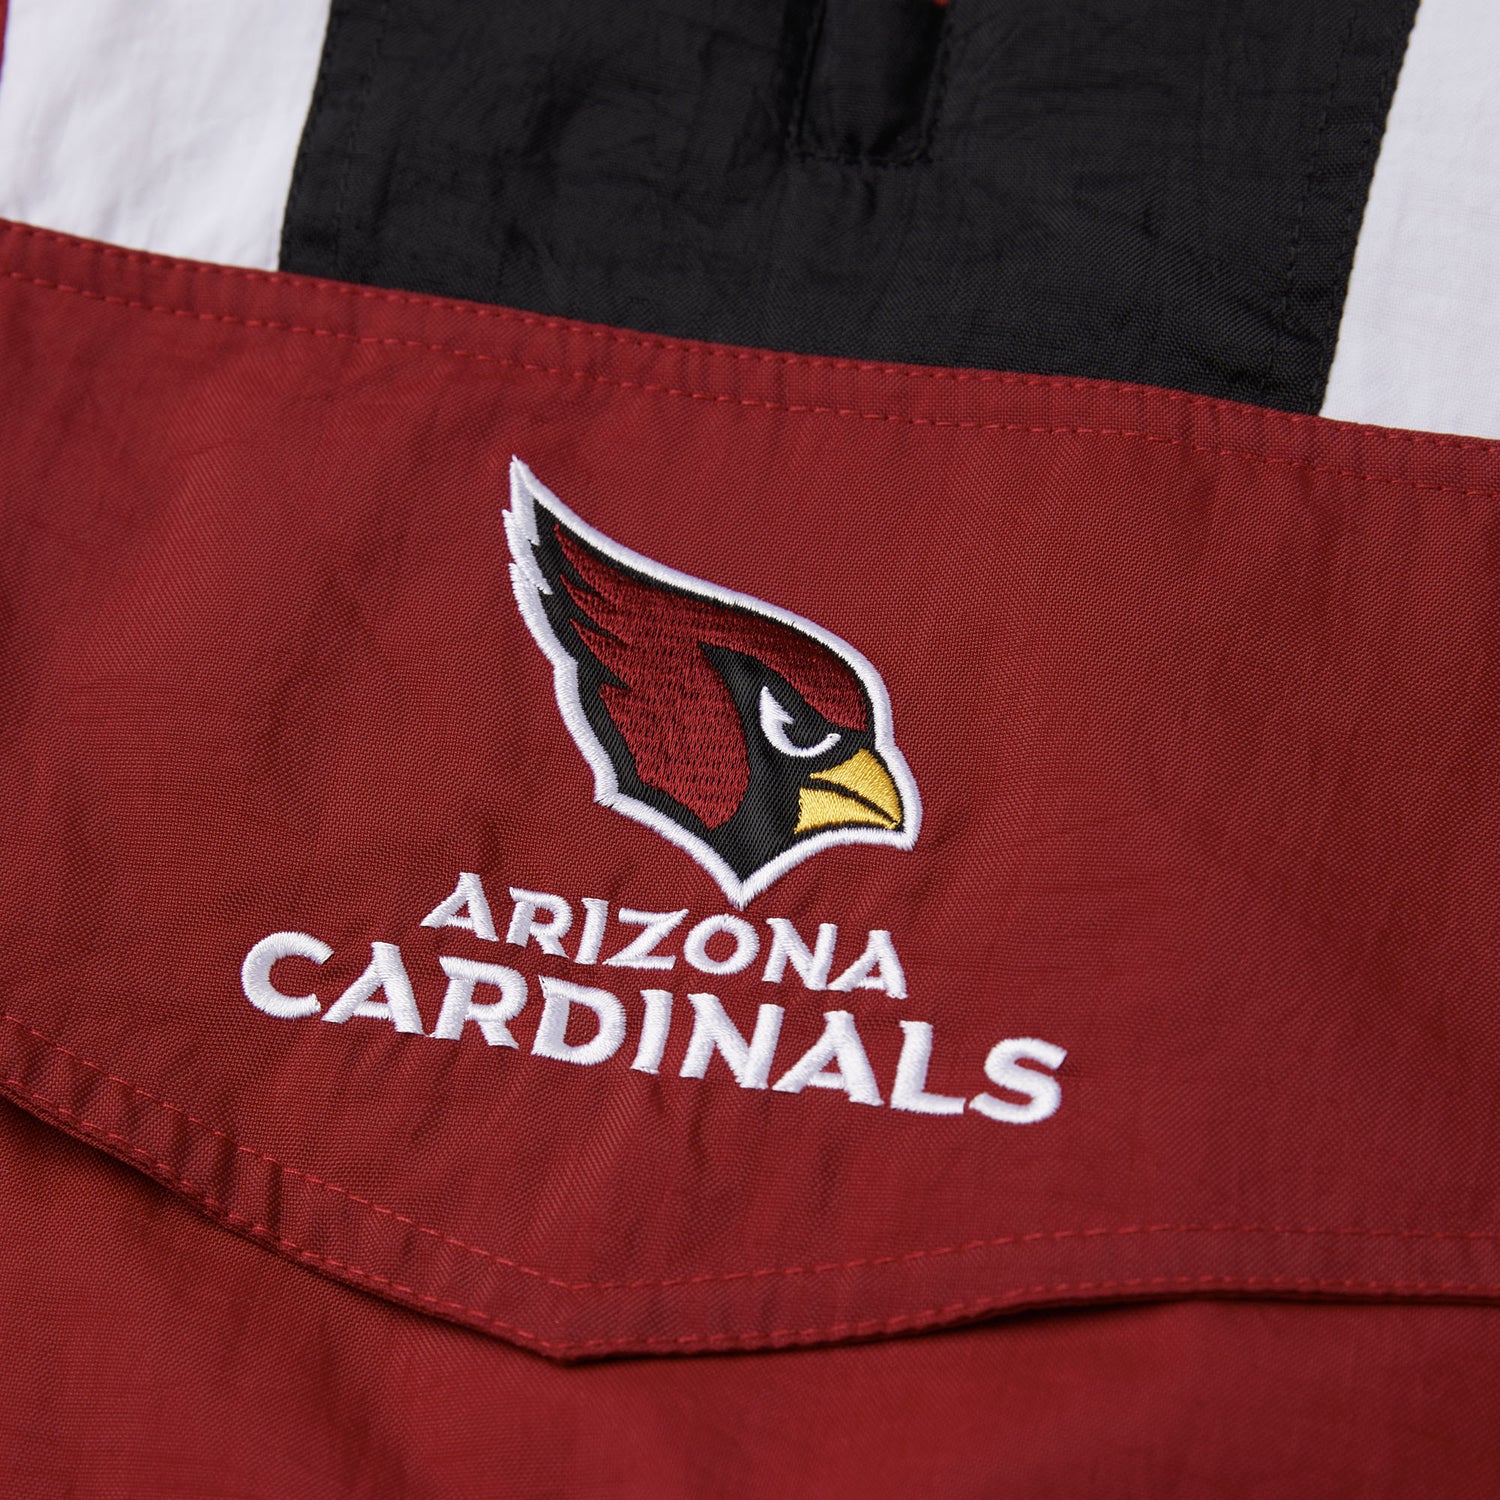 Football Fan Shop Officially Licensed NFL Crew-Neck Sweatshirt by Starter - Cardinals